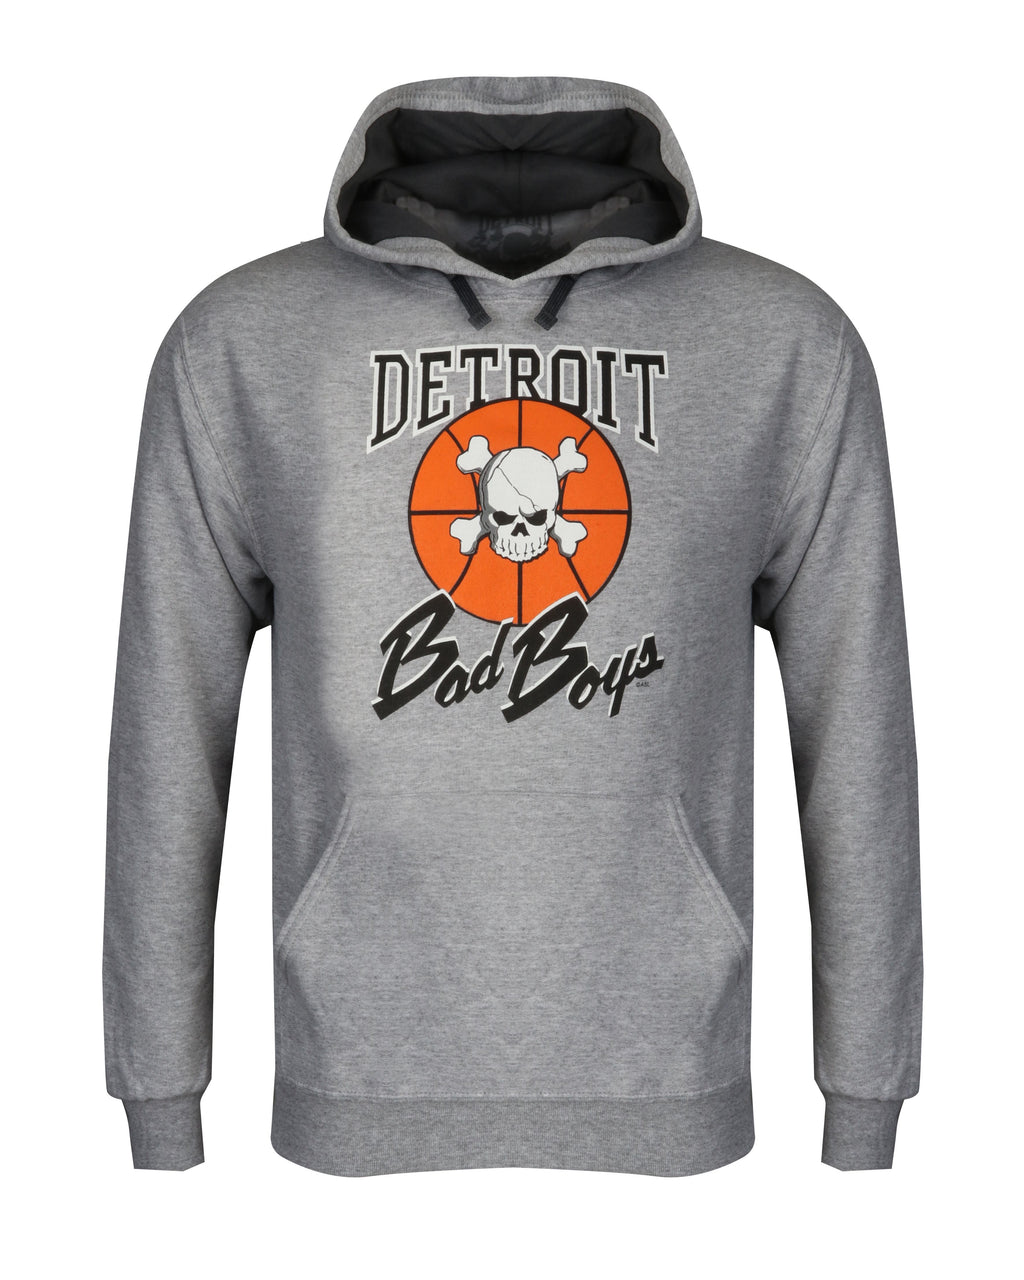 Authentic Detroit Bad Boys Hoody Sweatshirt -  Grey